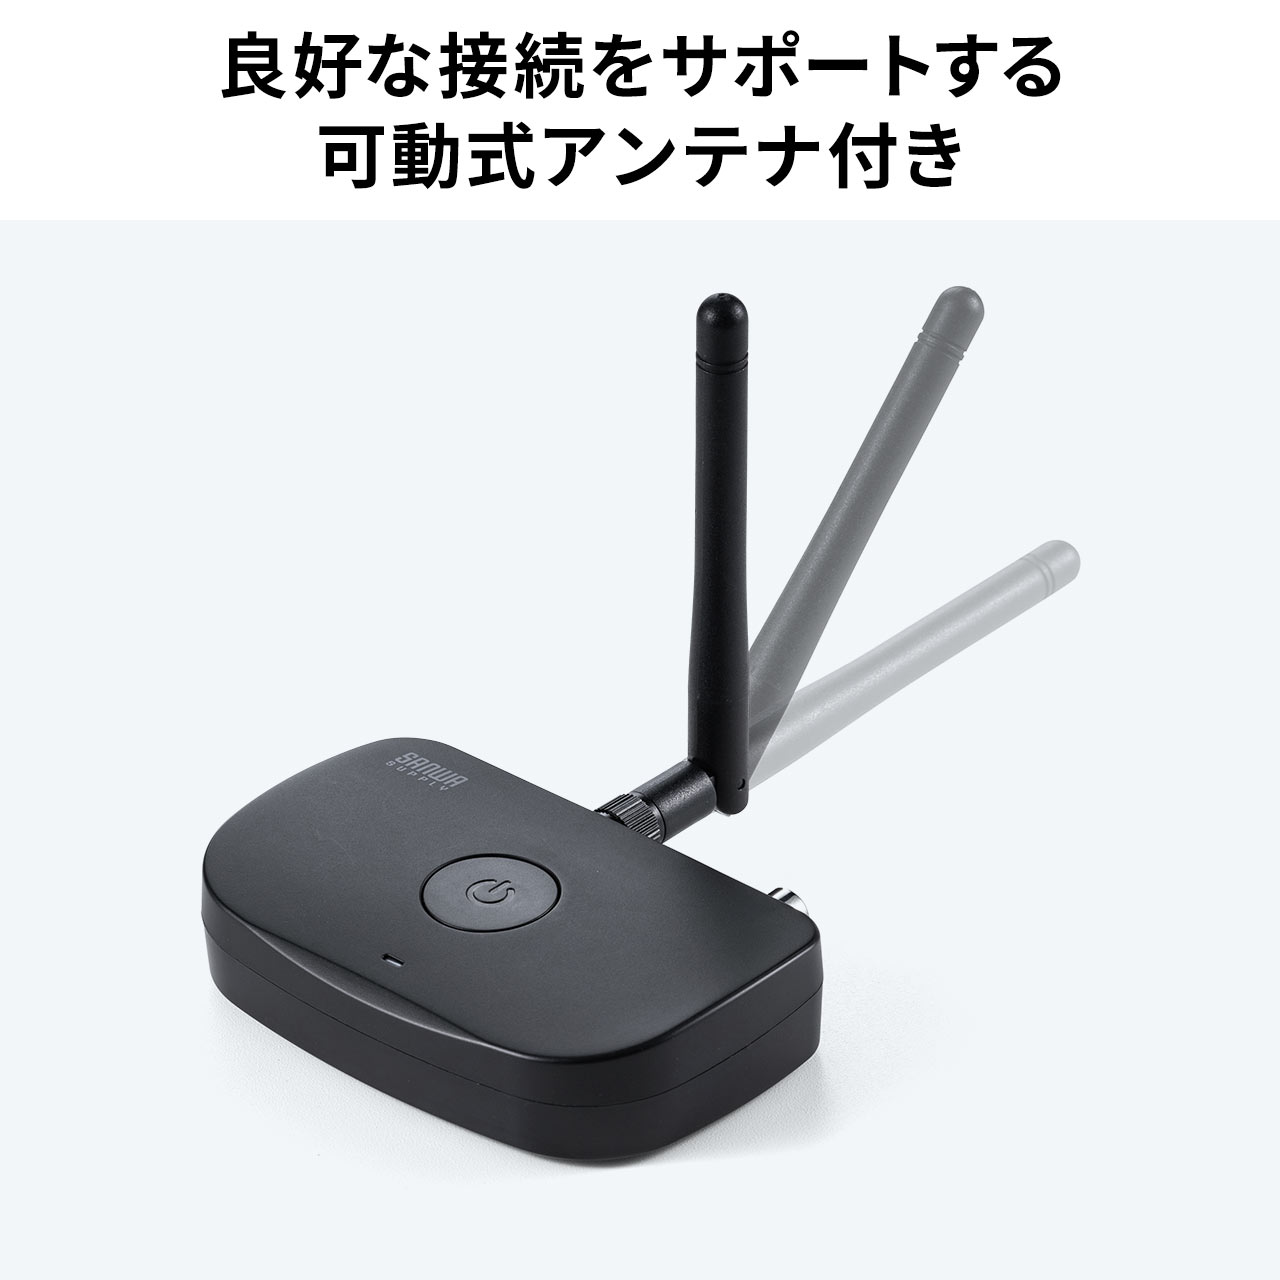 Bluetoothトランスミッター 送信機 テレビ 据え置き apt-X LL 2台同時接続 低遅延 常時給電 光デジタル 同軸デジタル 3.5mm AUX 400-BTAD011